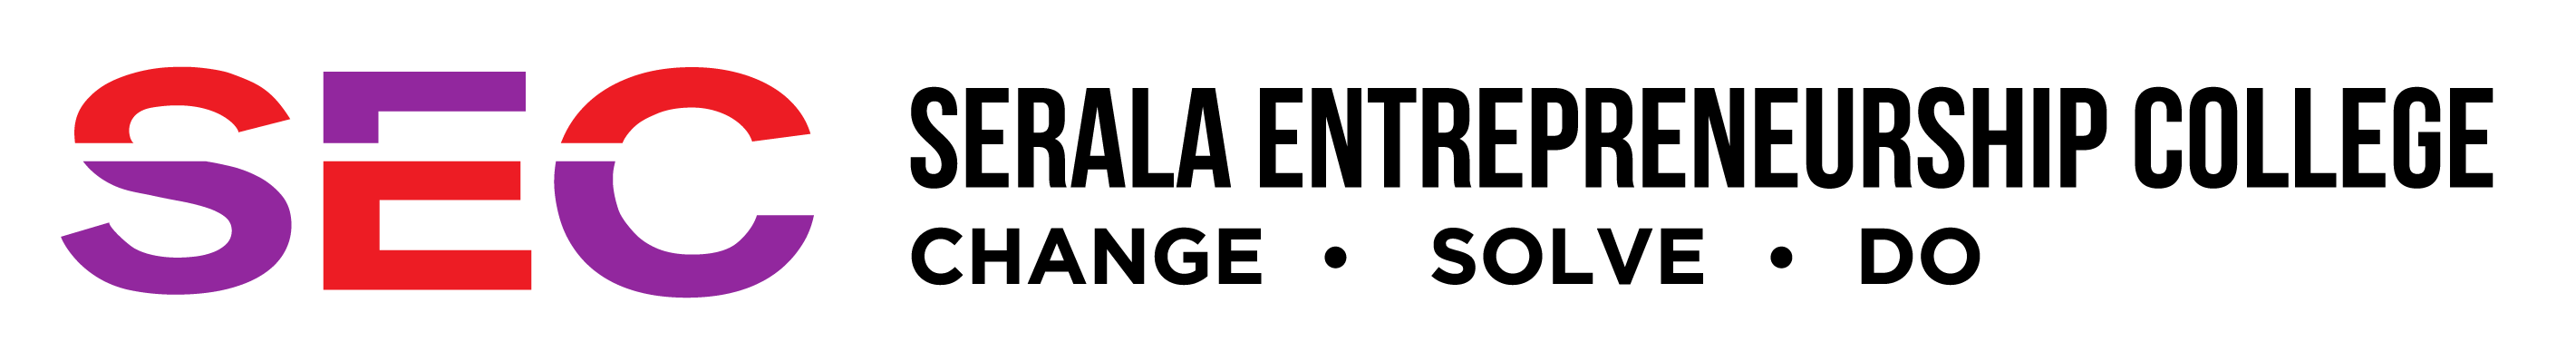 Serala Entrepreneurship College Promo: Flash Sale 35% Off